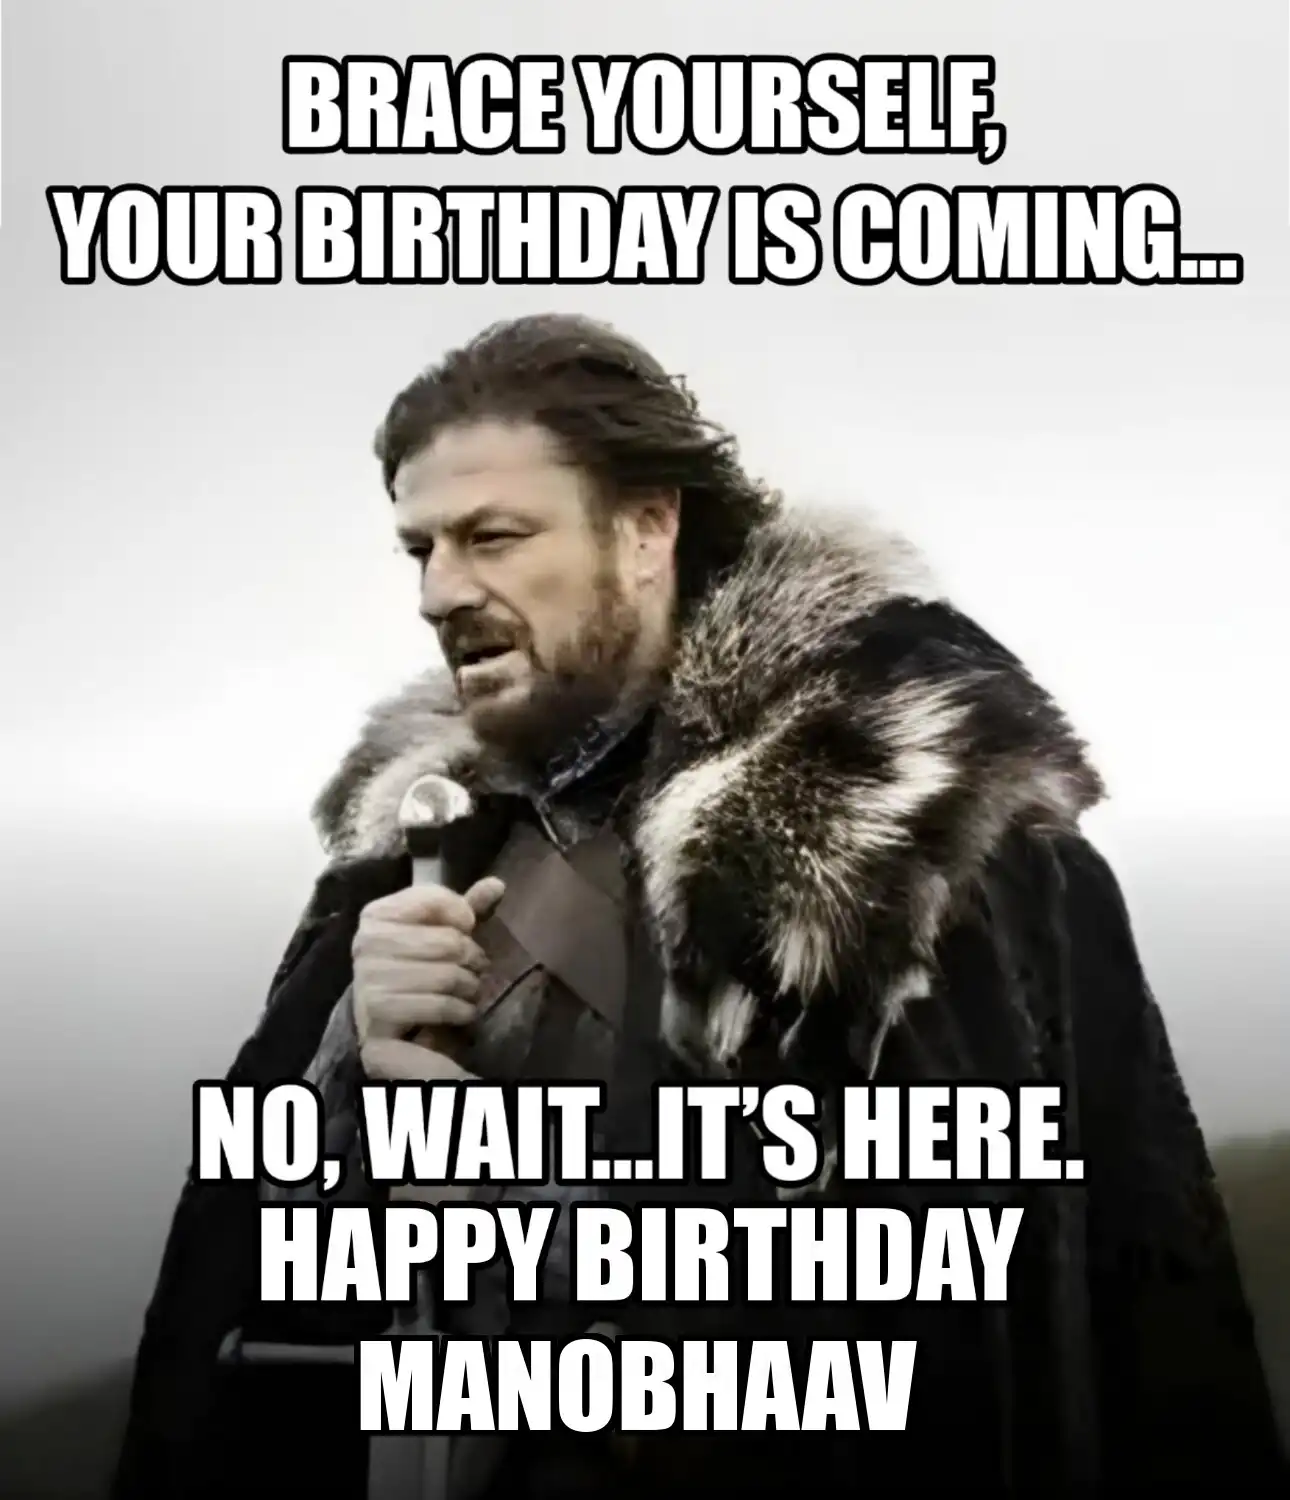 Happy Birthday Manobhaav Brace Yourself Your Birthday Is Coming Meme